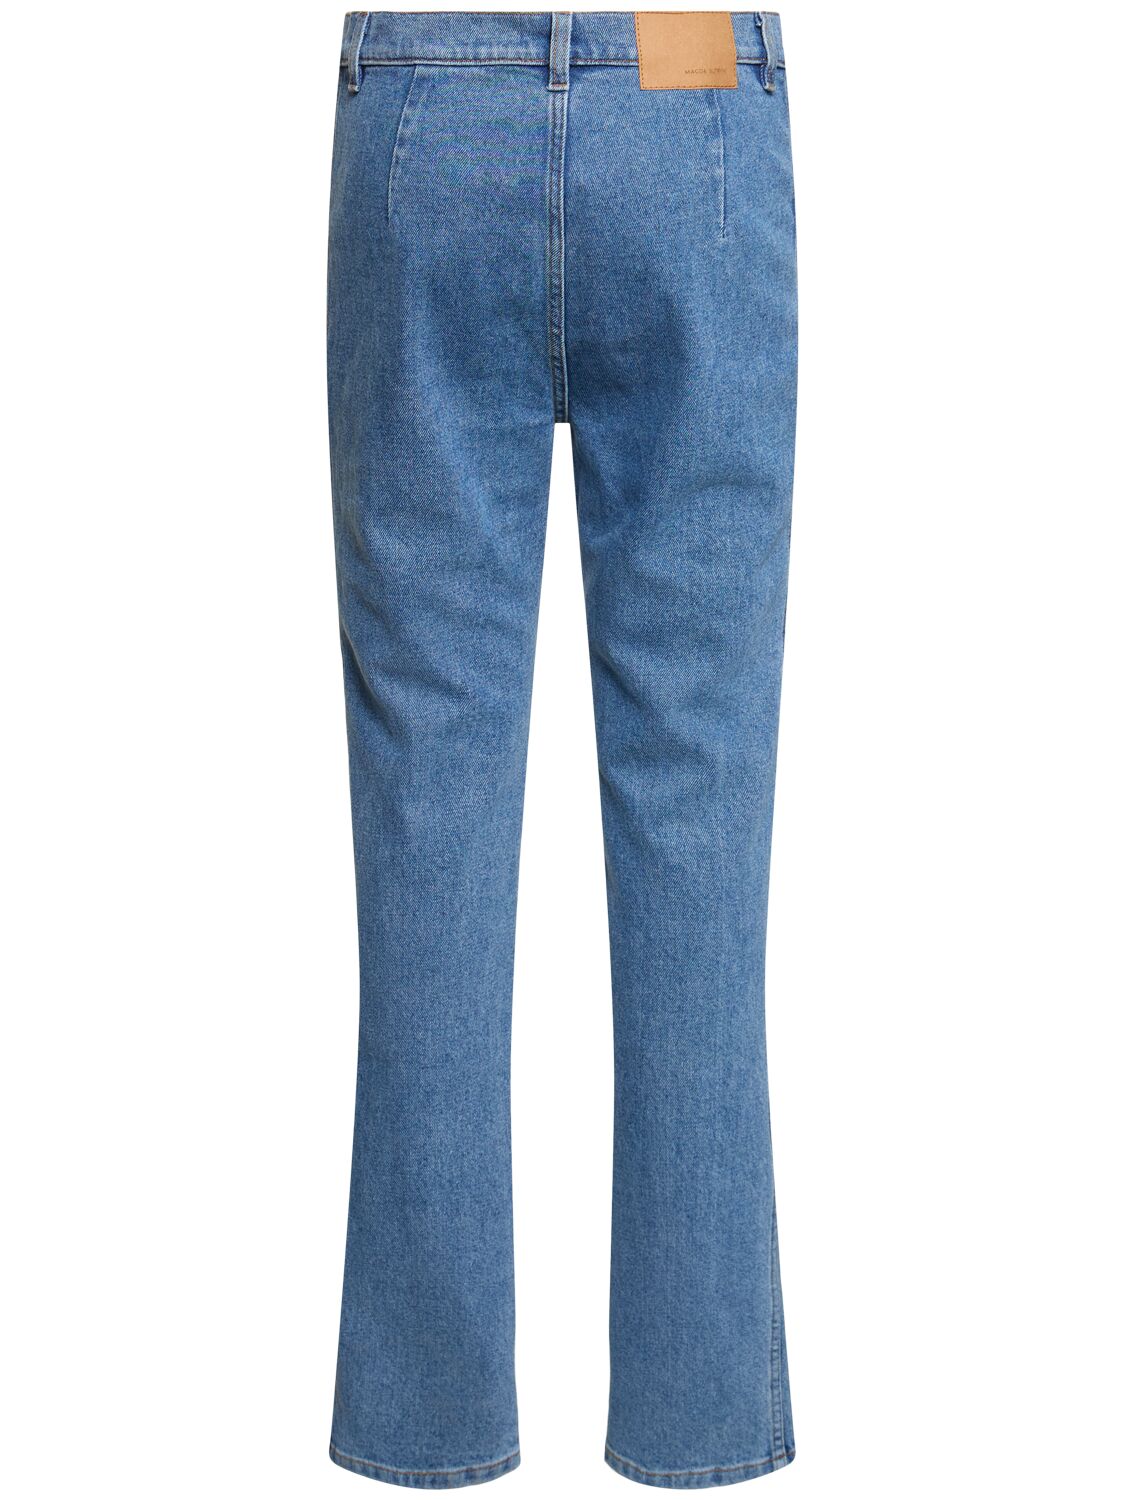 Shop Magda Butrym Denim High Rise Skinny Jeans In Blue